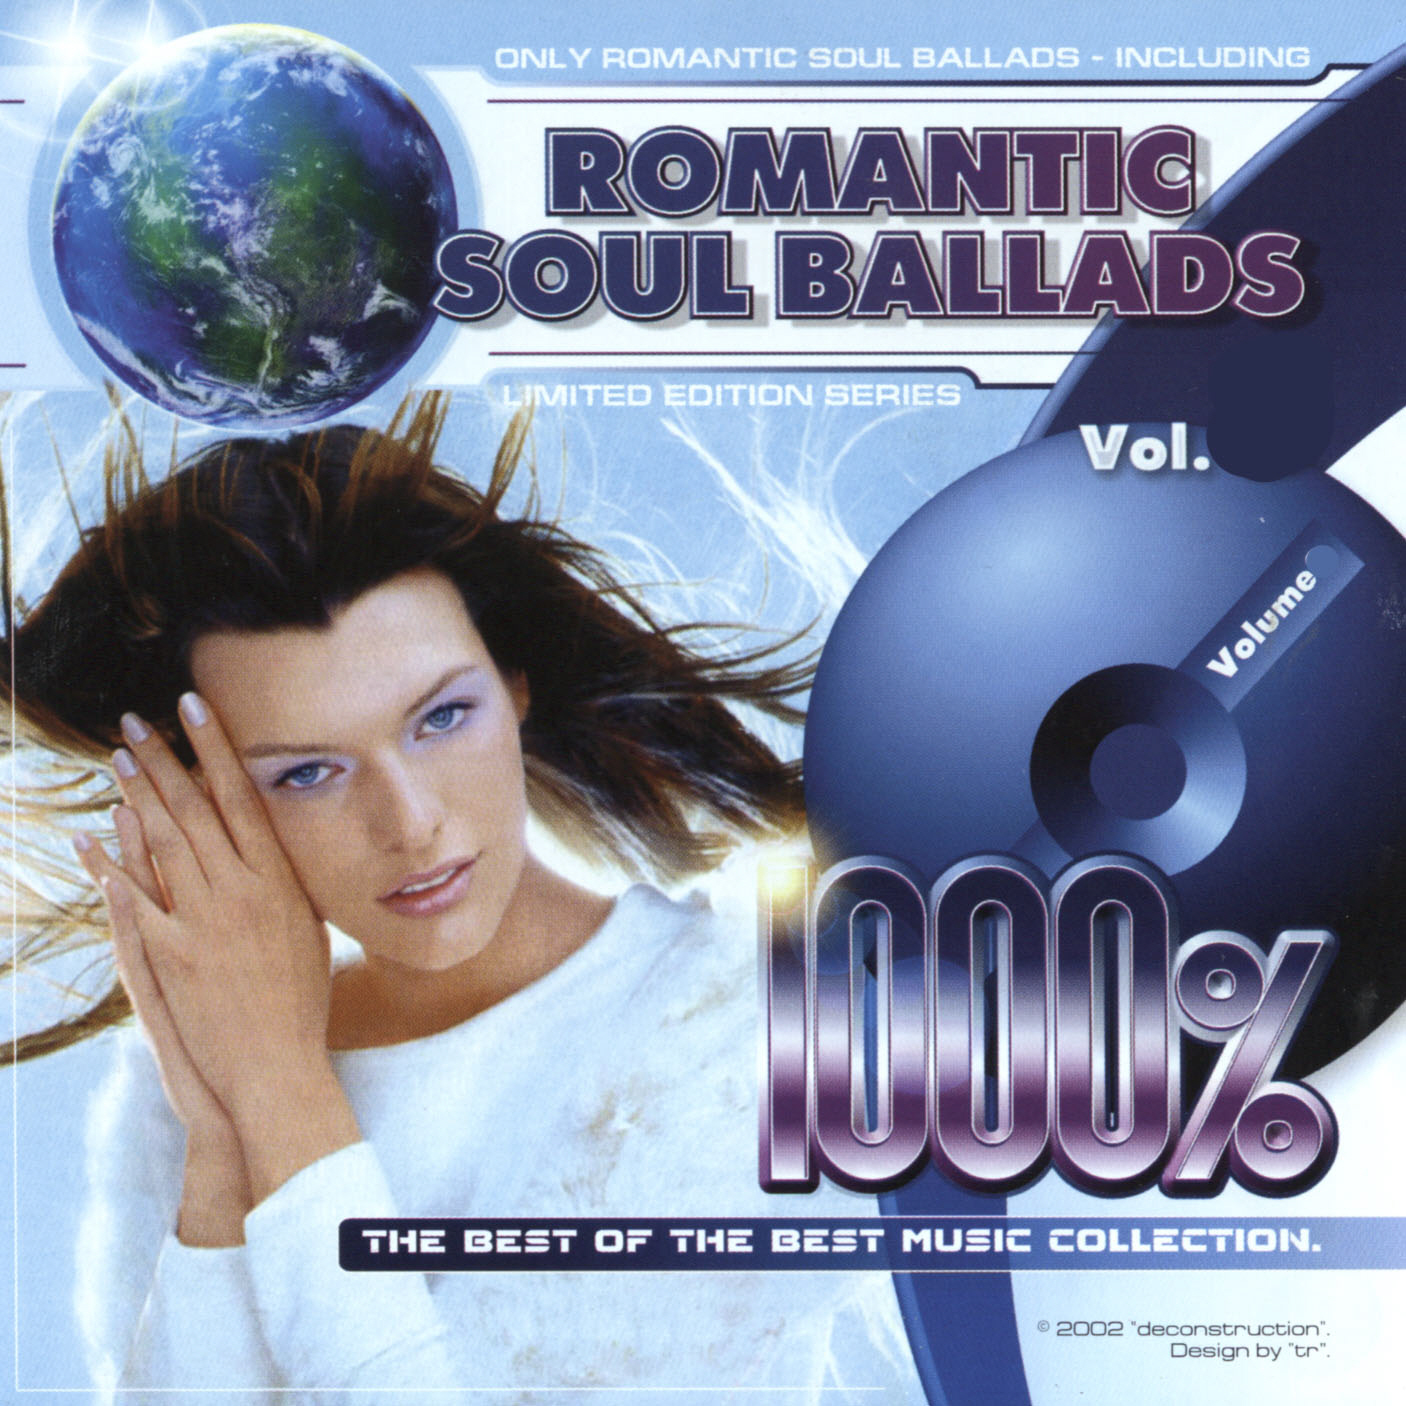 Collection музыка. Диск Romantic Ballads collection. Сборник 1000%. Romantic Soul Ballads. CD диск 1000% the best.